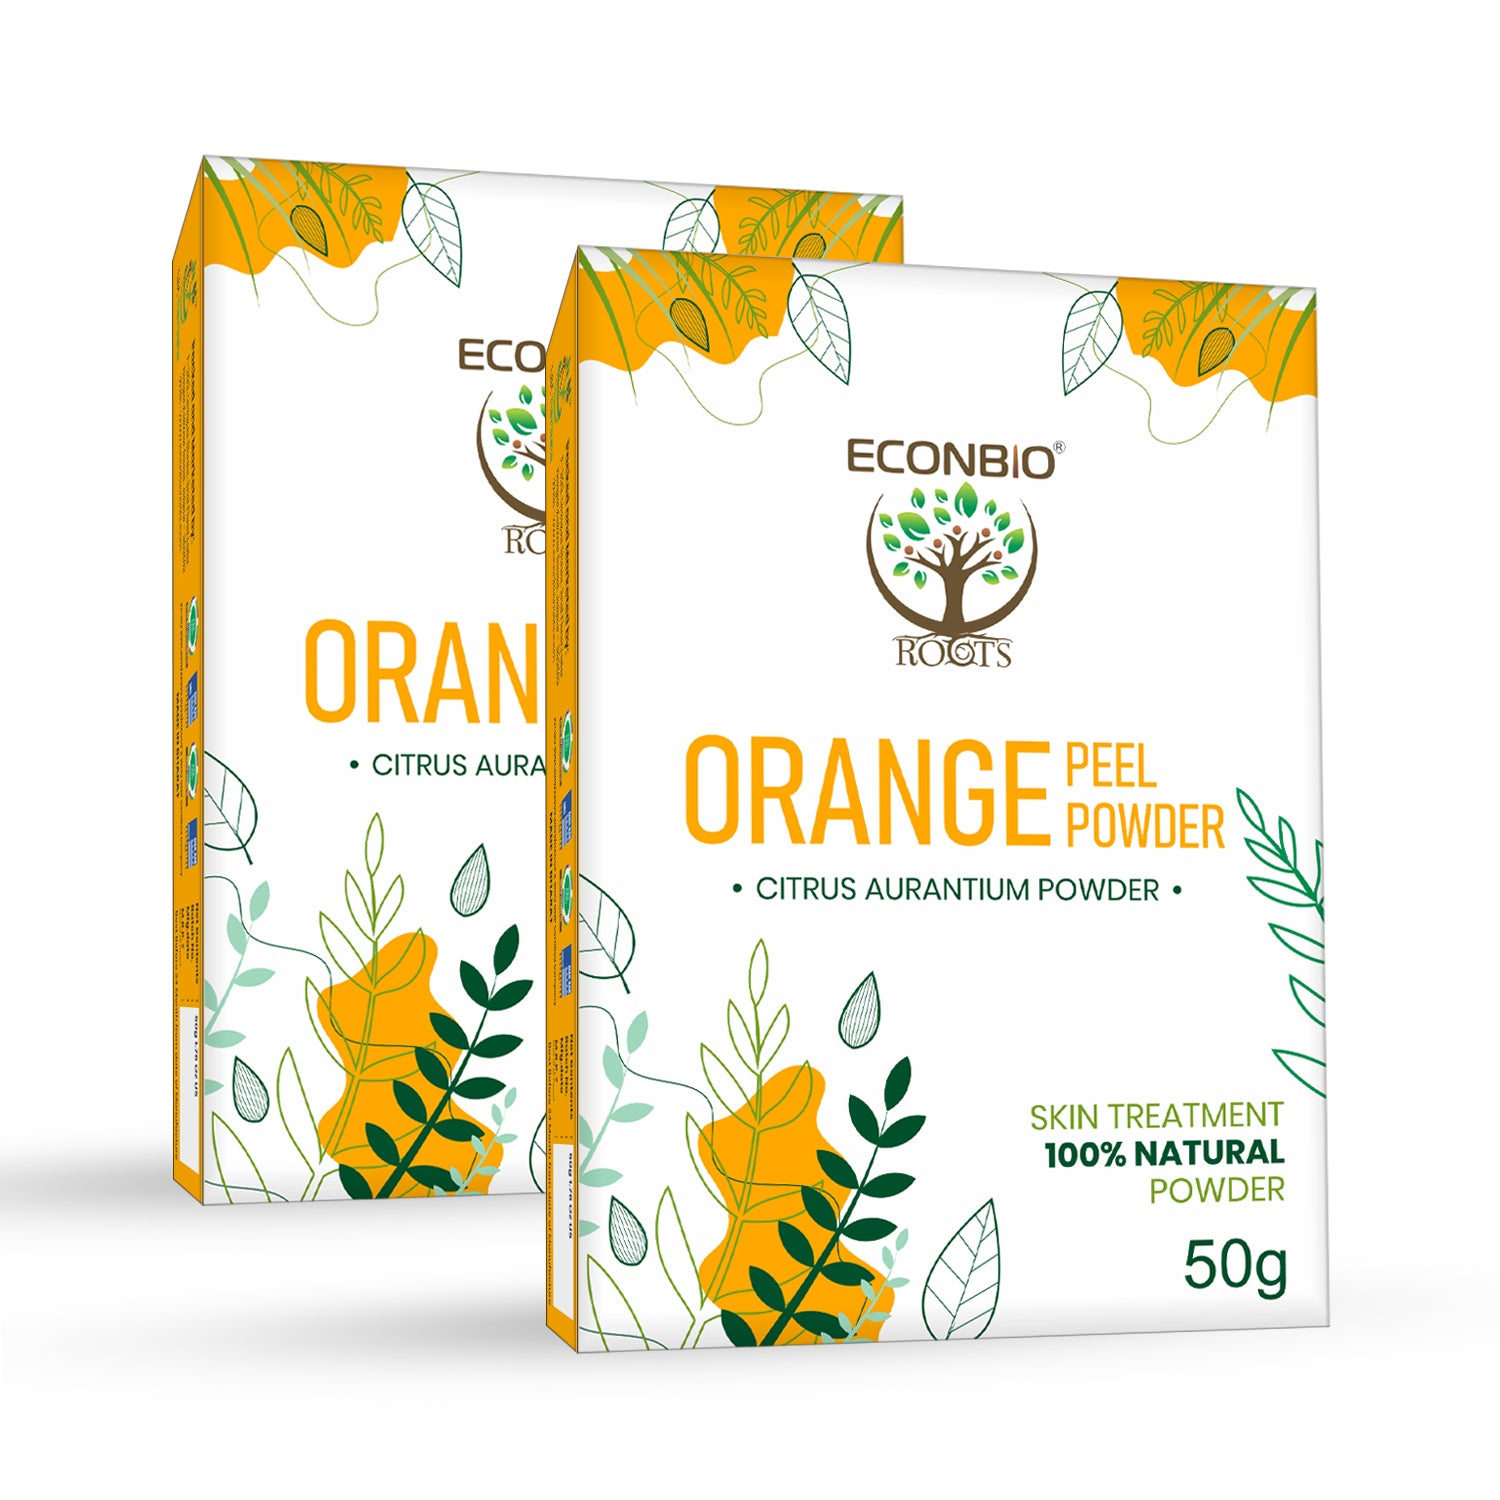 ECONBIO ROOTS 100% Natural Orange Peel Powder 50g (Pack of 2)